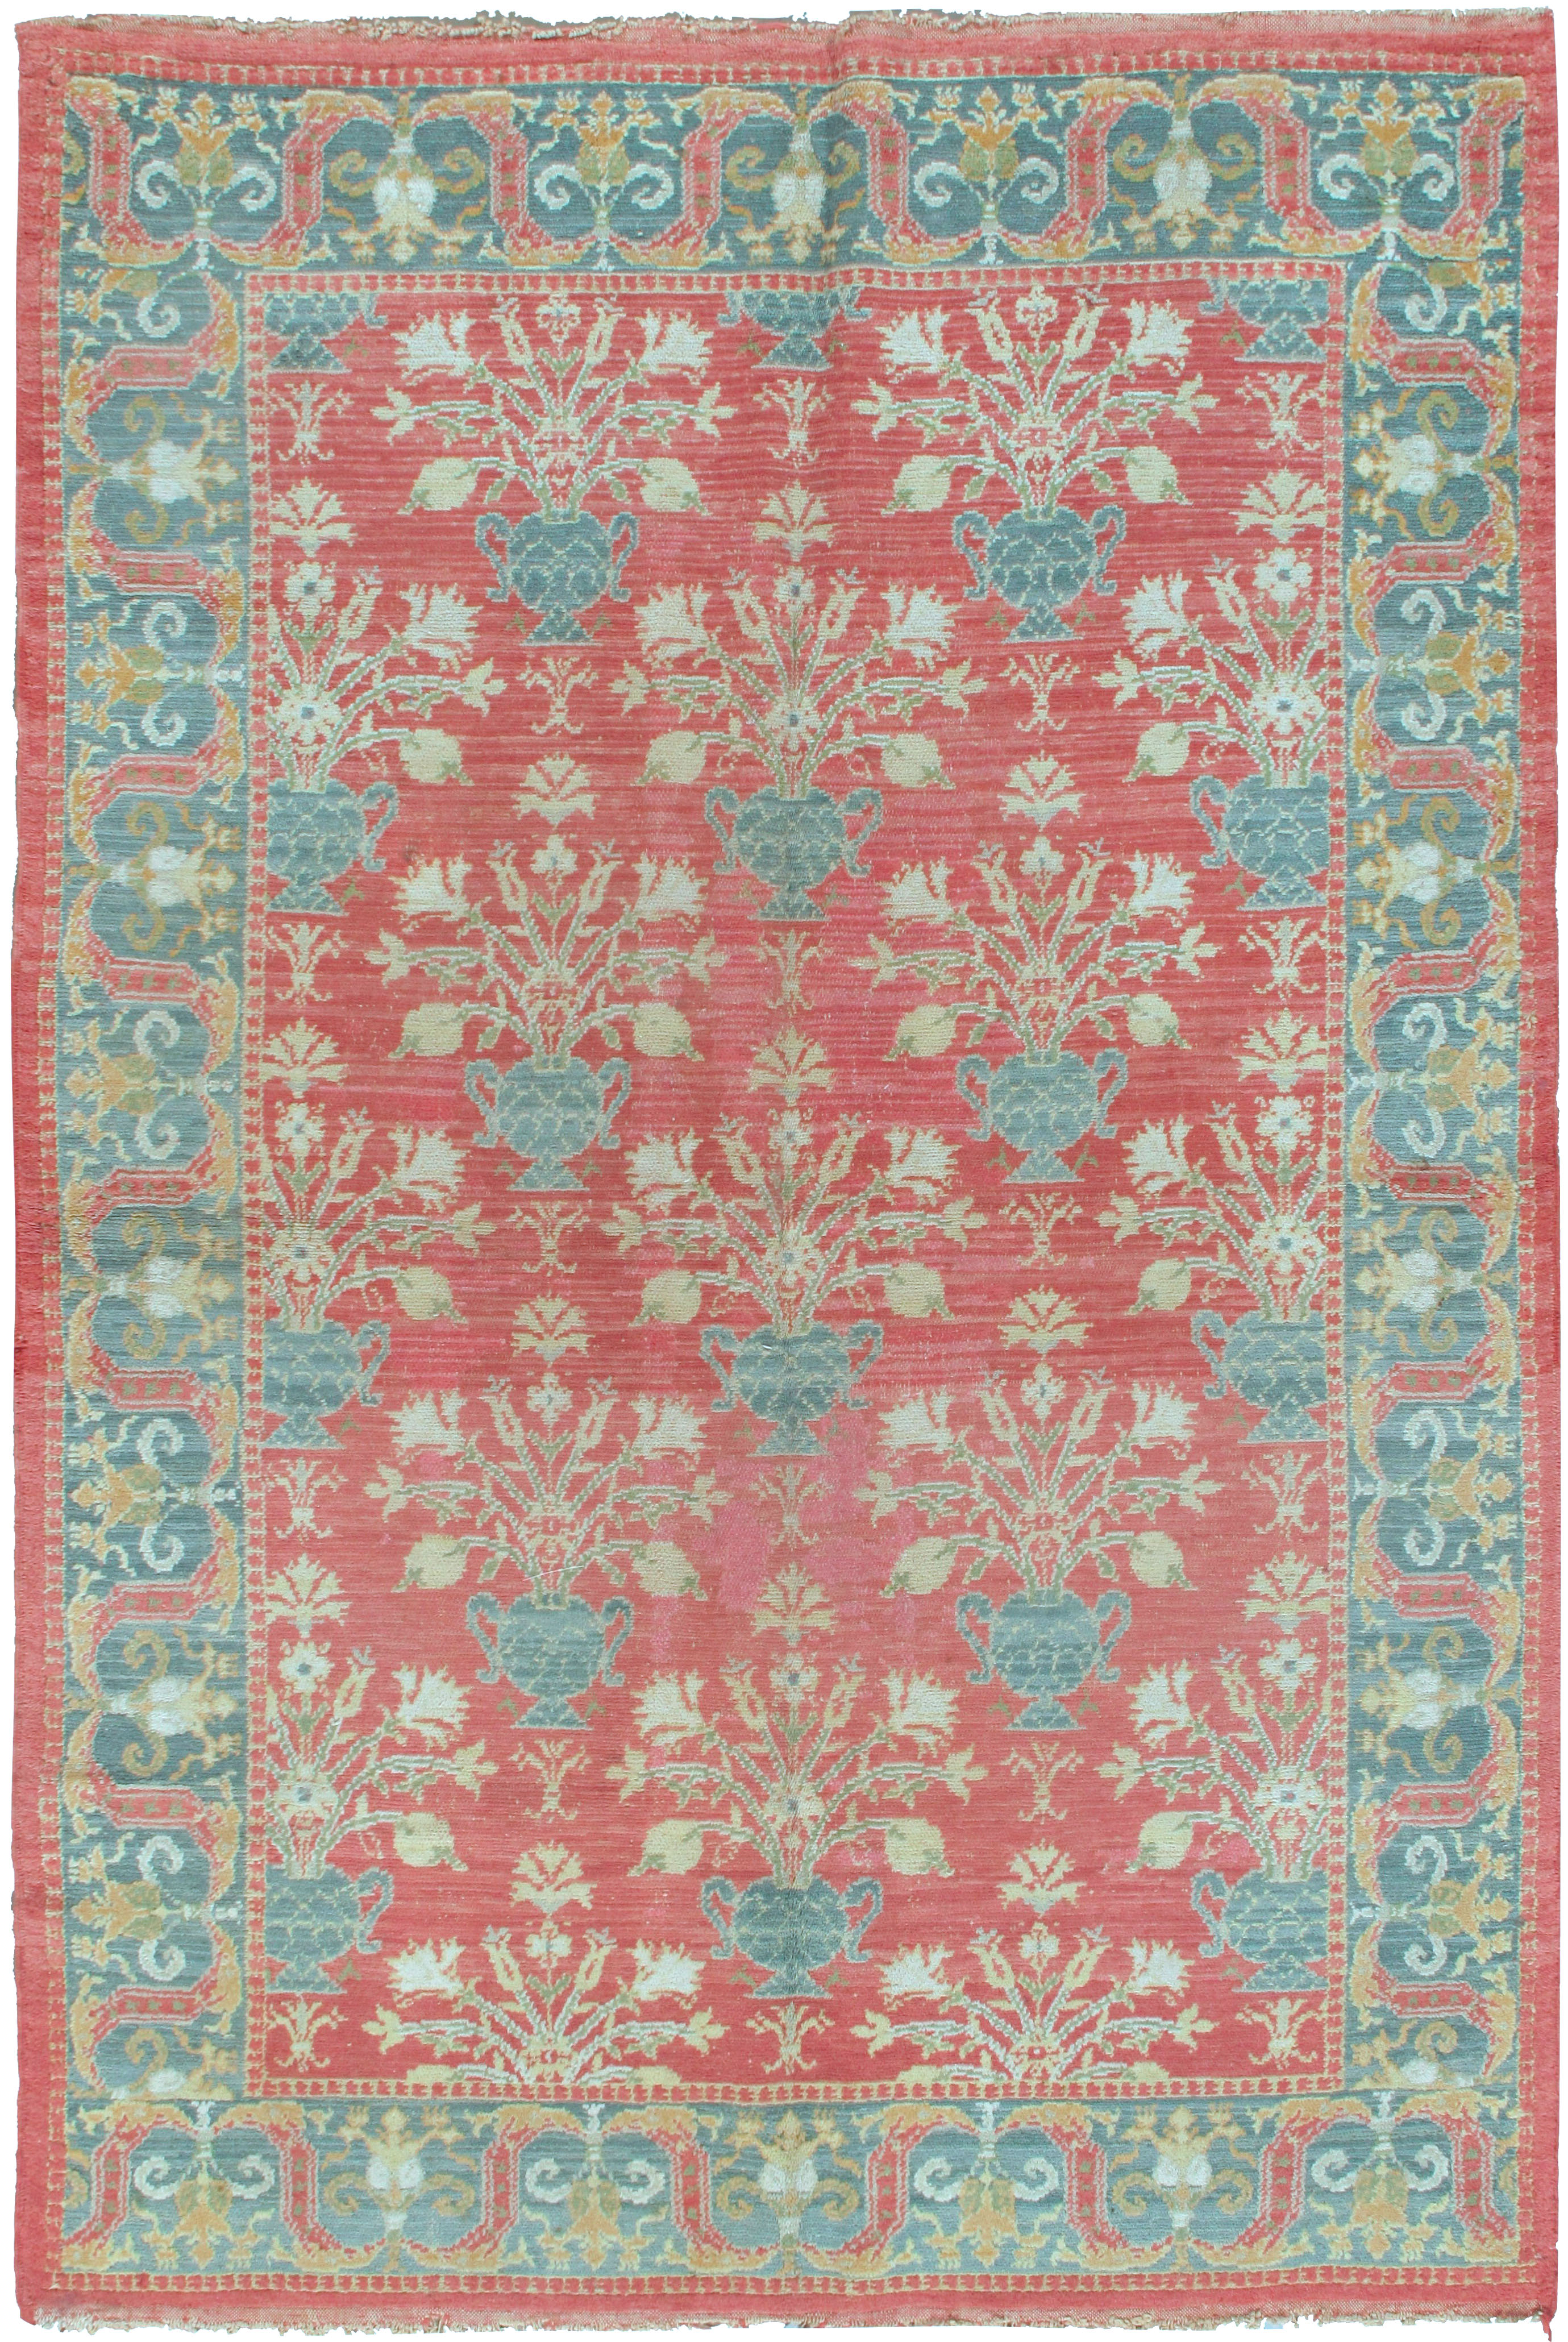 Vintage Spanish Rug; Vintage carpets